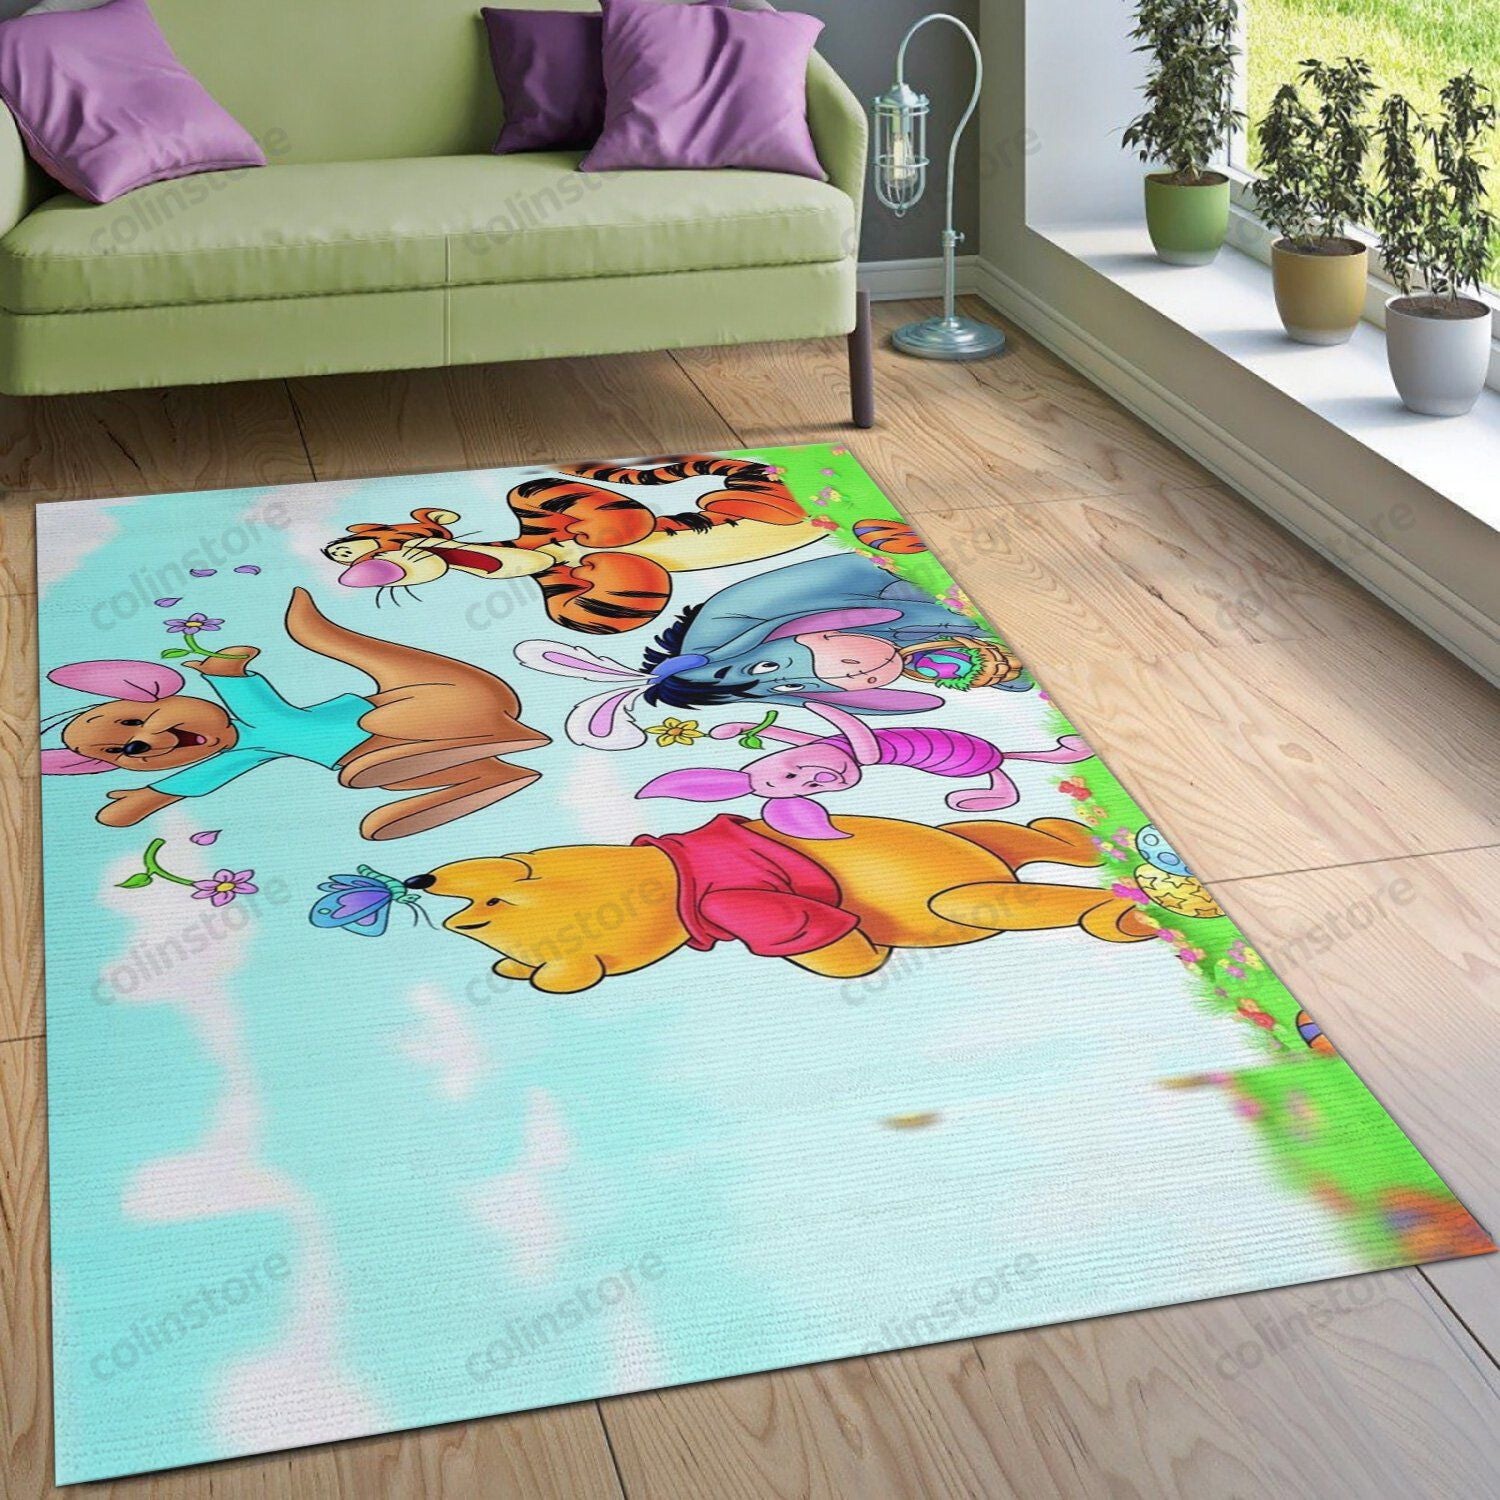 Winnie The Pooh Area Area Rug Carpet For Living Room Home Decor